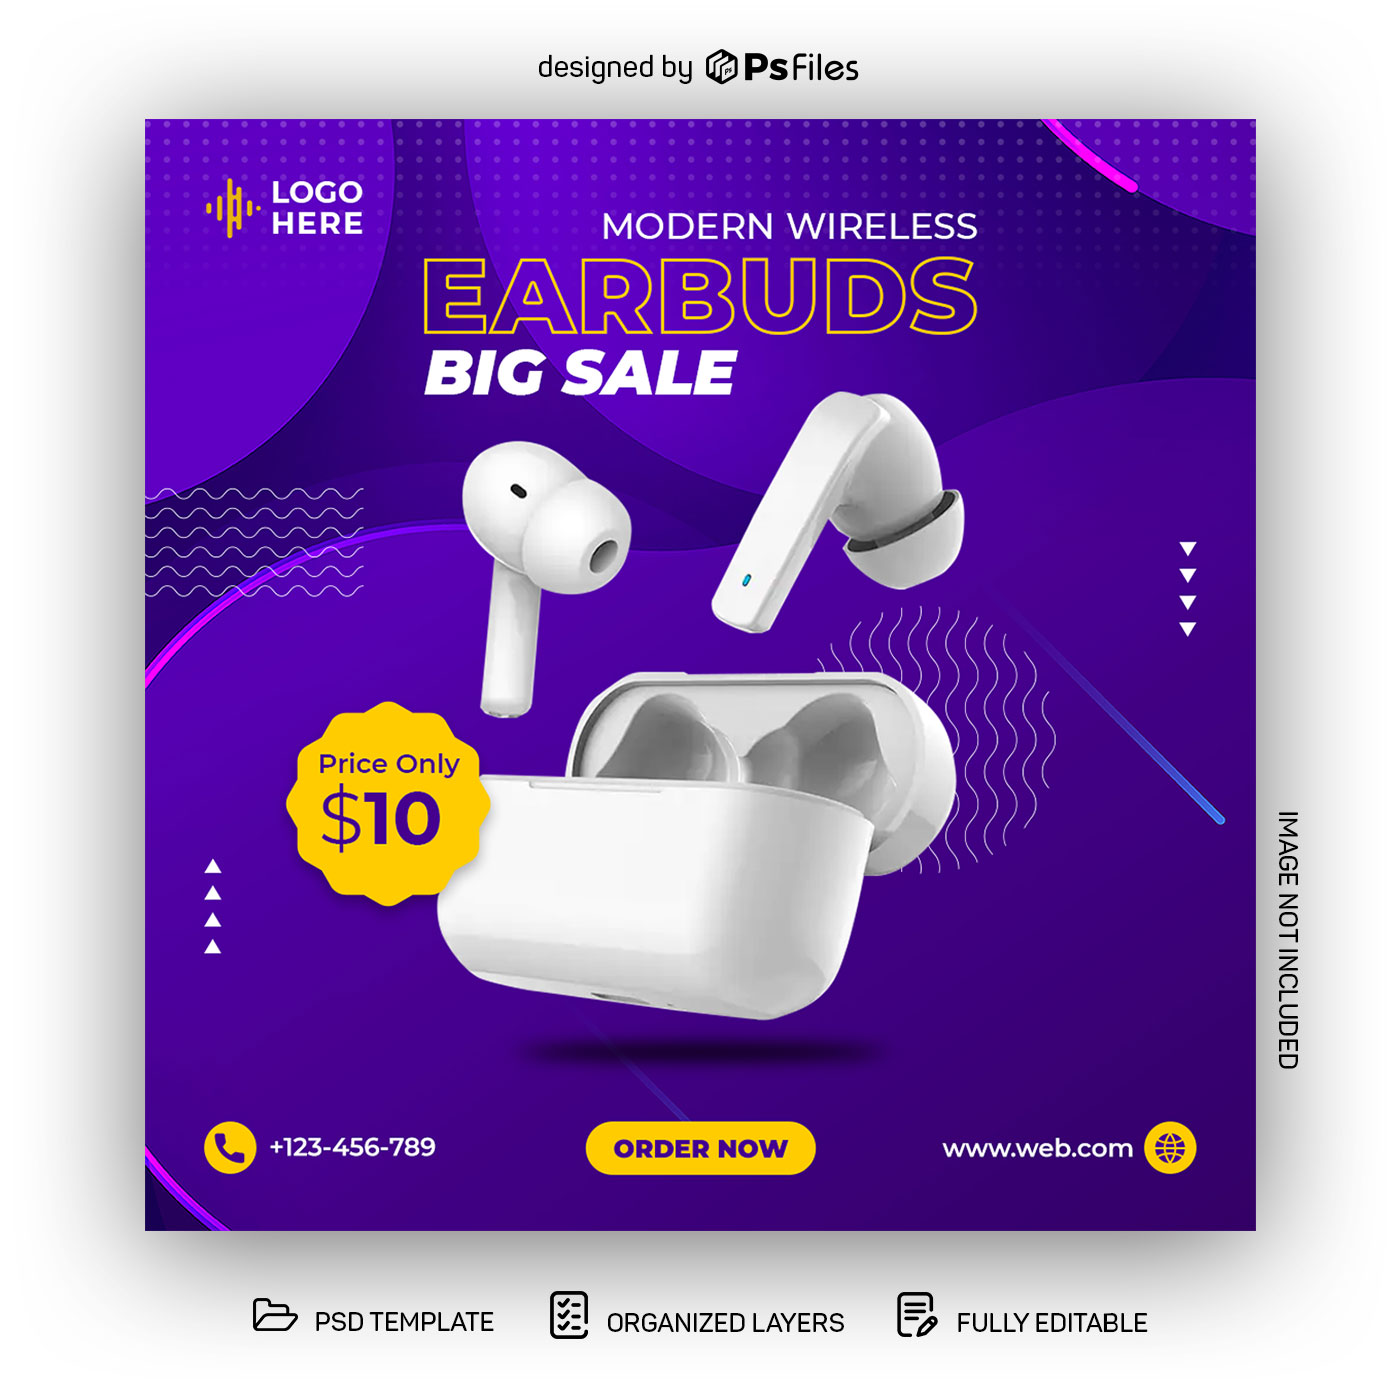 Modern Wireless Earbuds Sale Online Instagram Ad Template - VistaCreate